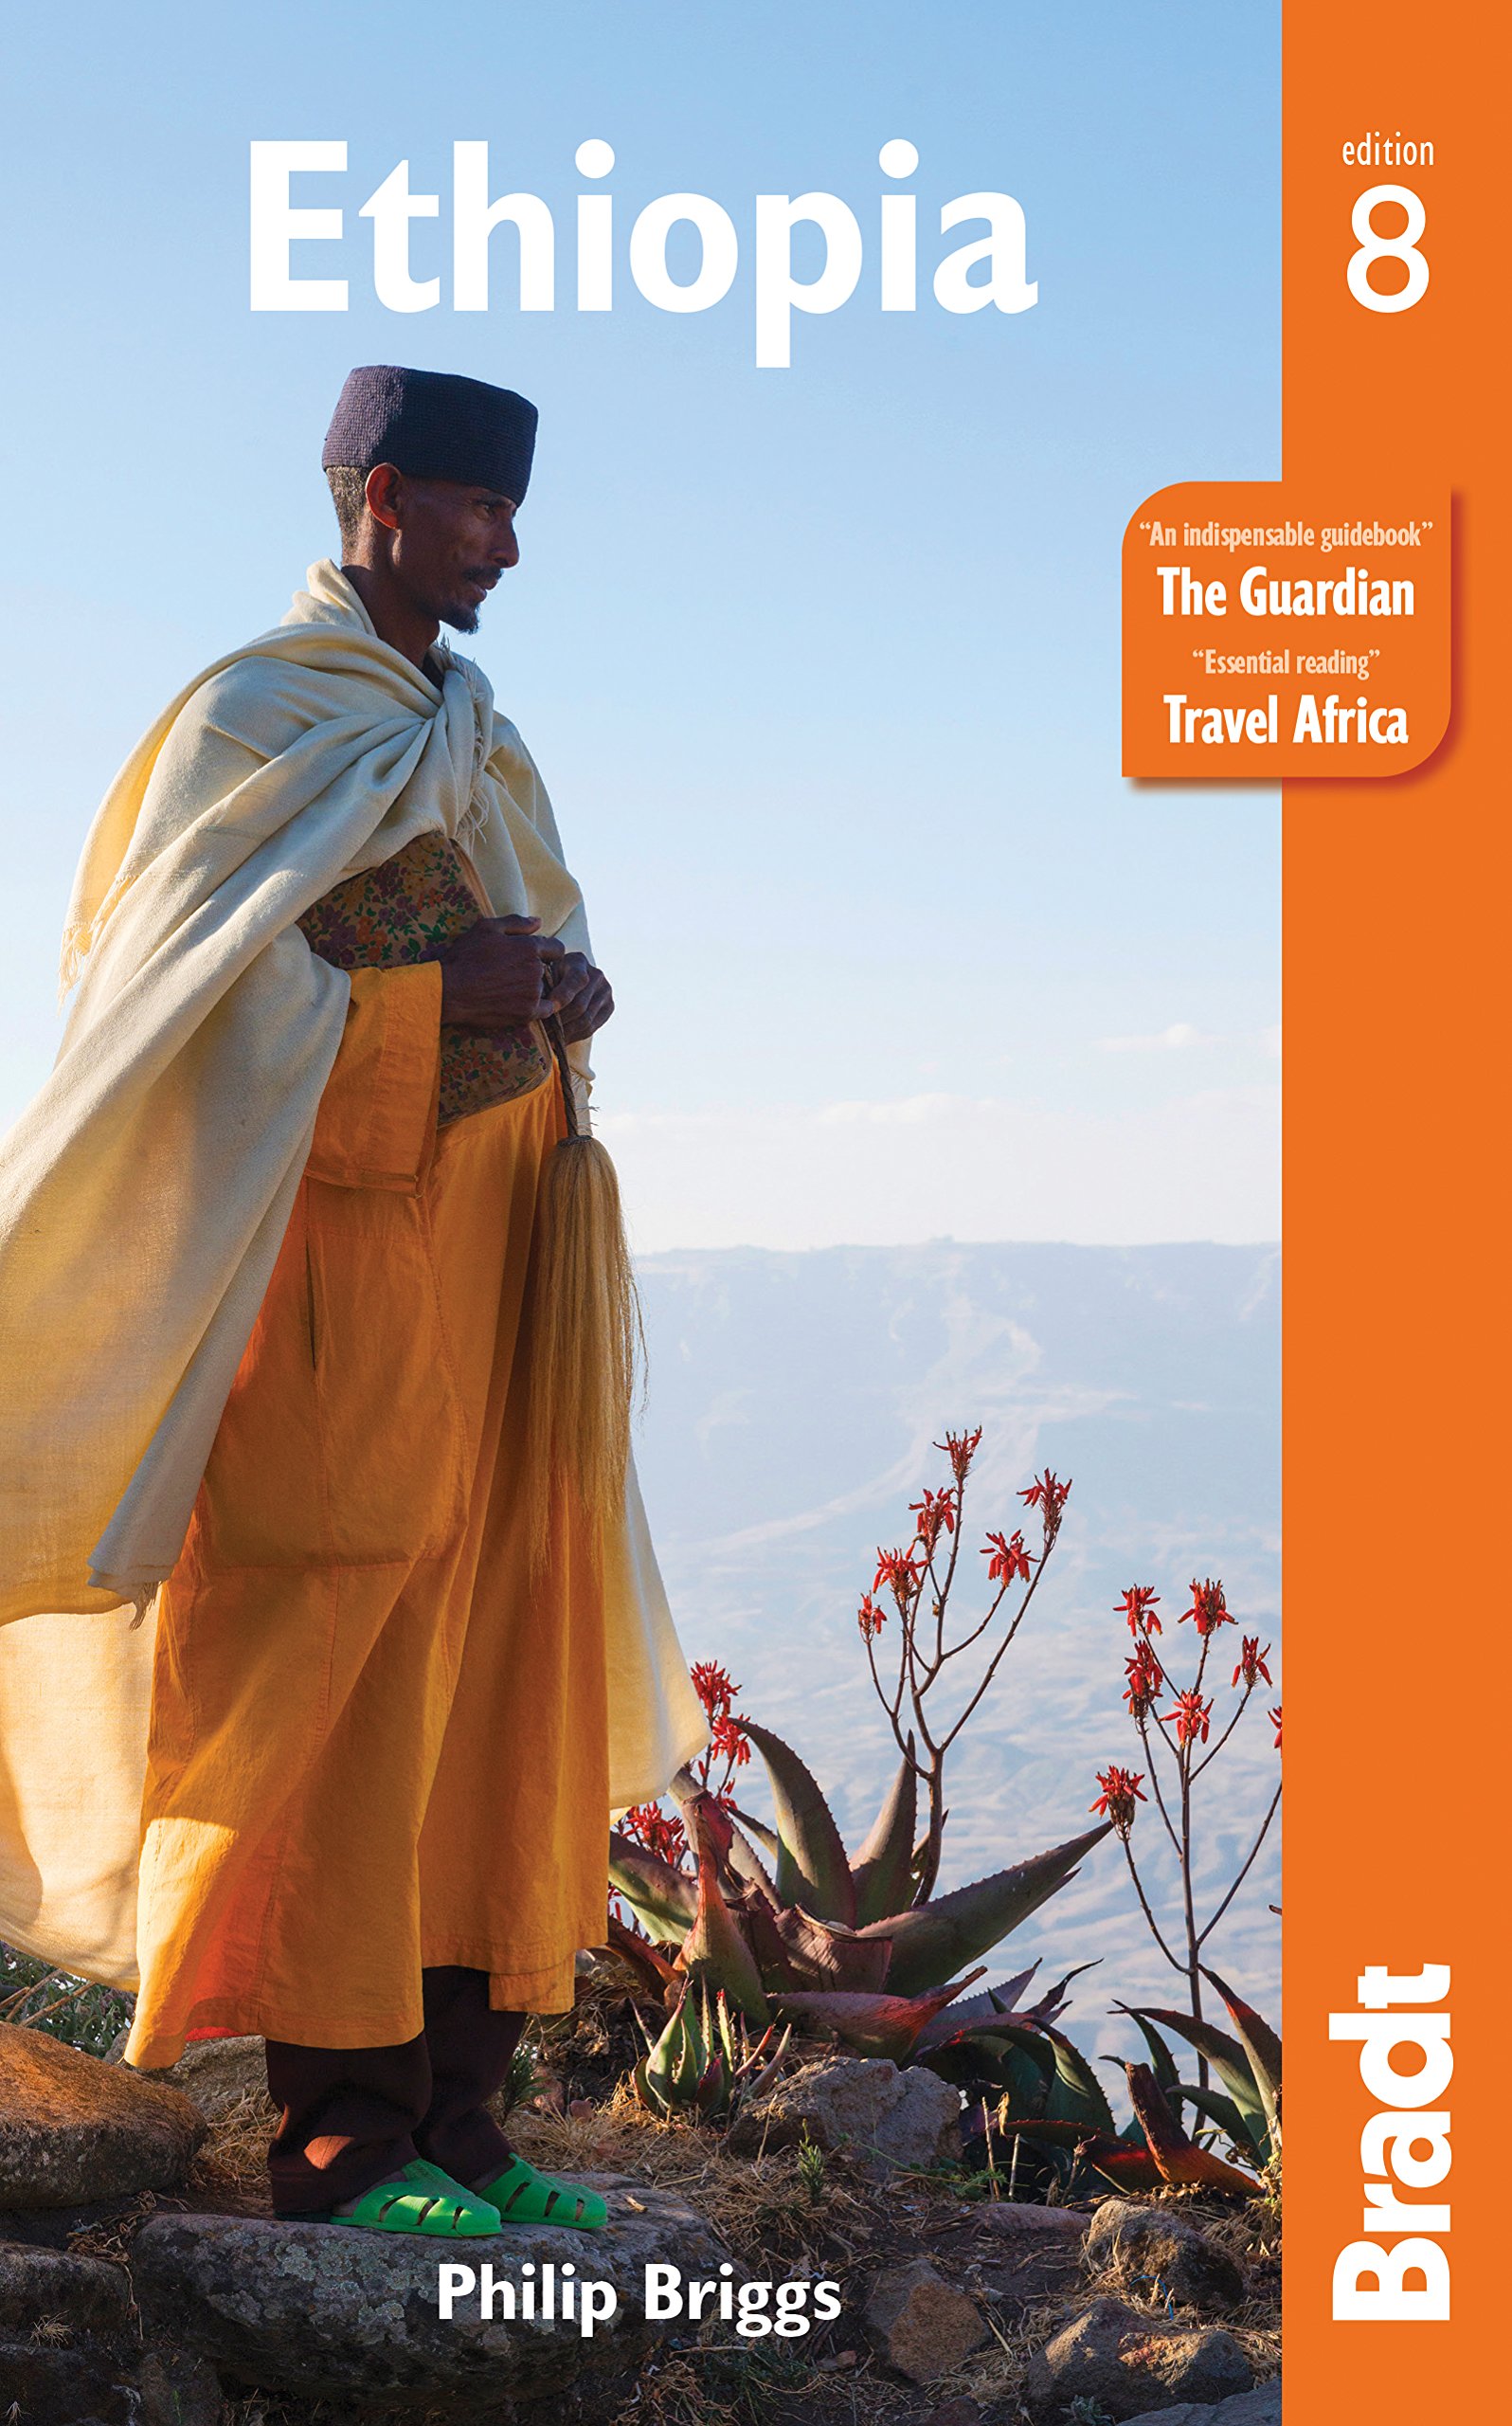 Bradt Travel Guides průvodce Ethiopia 8.edice anglicky (Etiopie)